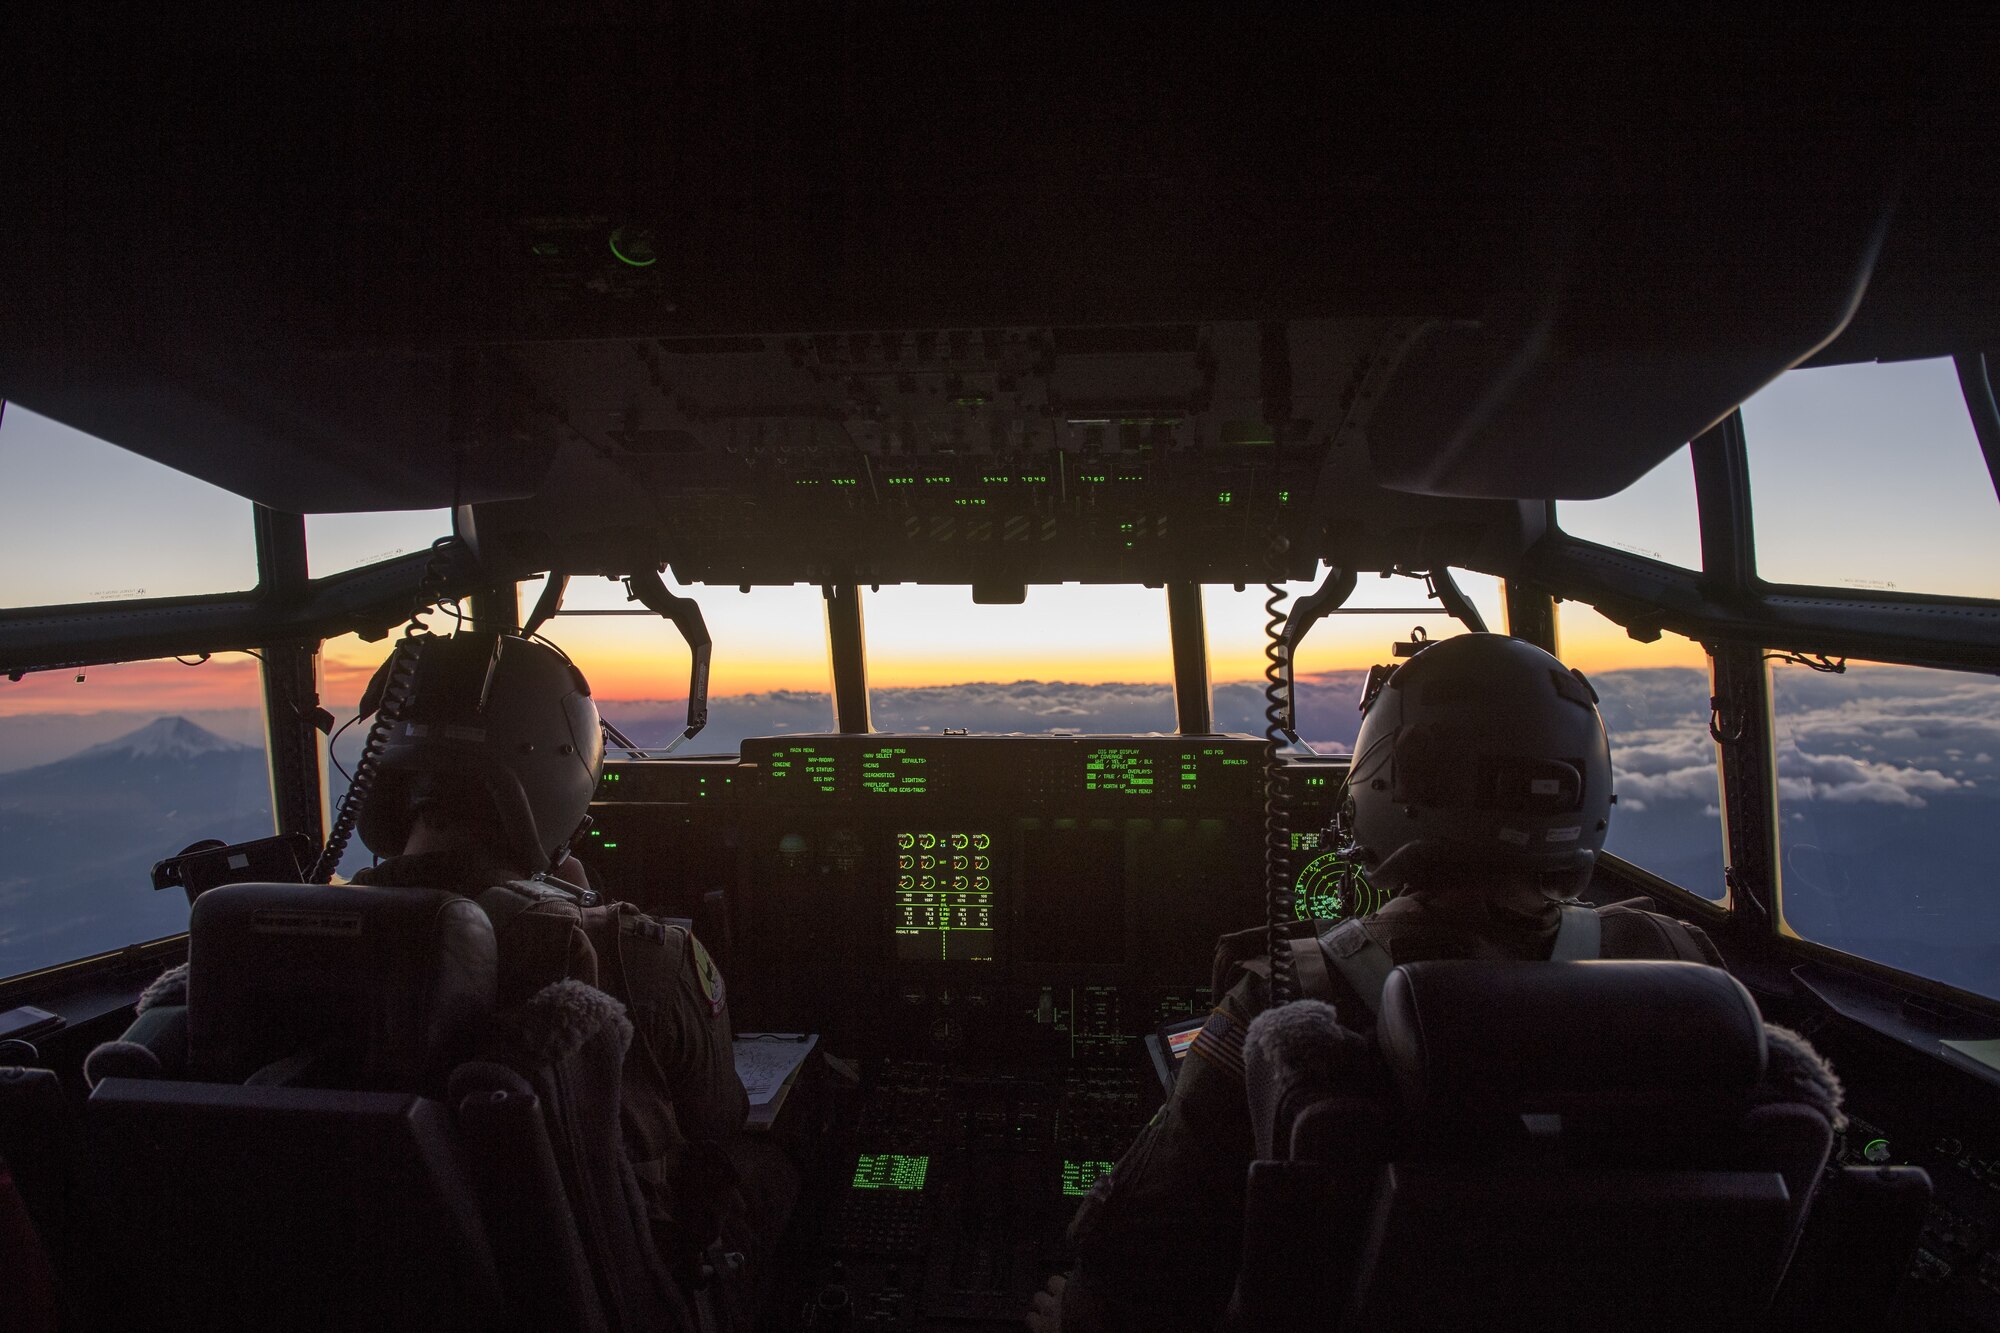 A 41st Troop Carrier Squadron C-130J Super Hercules aircrew from Little Rock Air Force Base, AR, flies past Mt. Fuji during exercise Vigilant Ace 18, Dec. 6, 2017, over the Saitama prefecture, Japan.